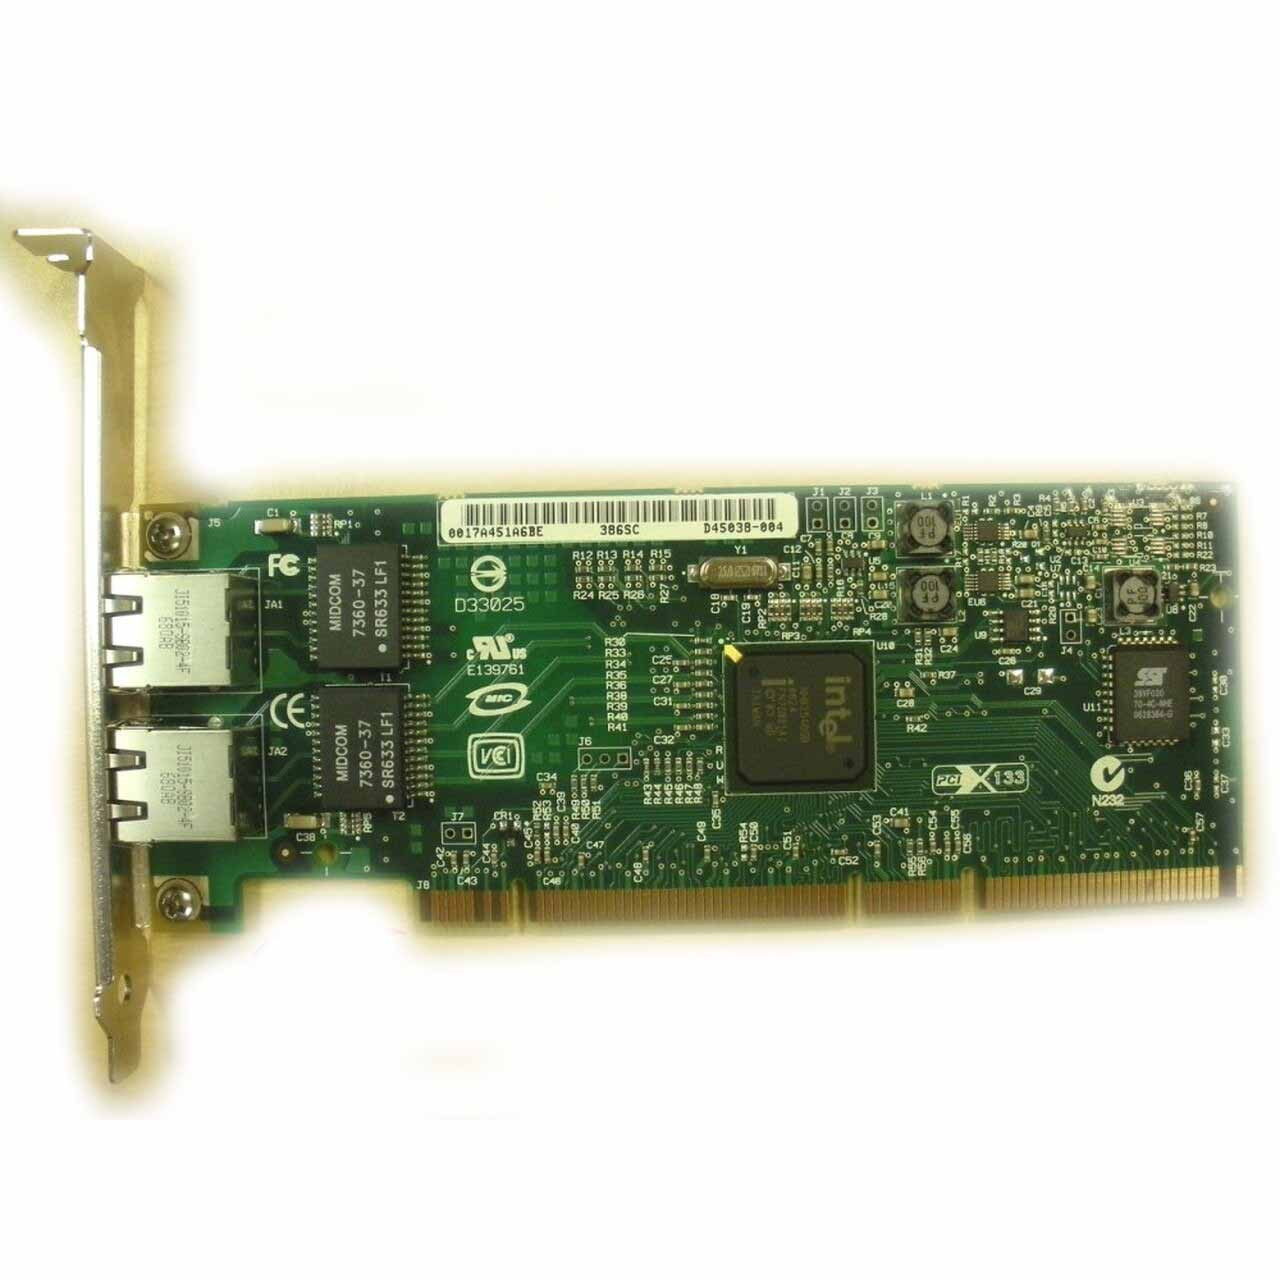 HP A7012A PCI-X 2 Port 1000Base-T Gigabit Adapter